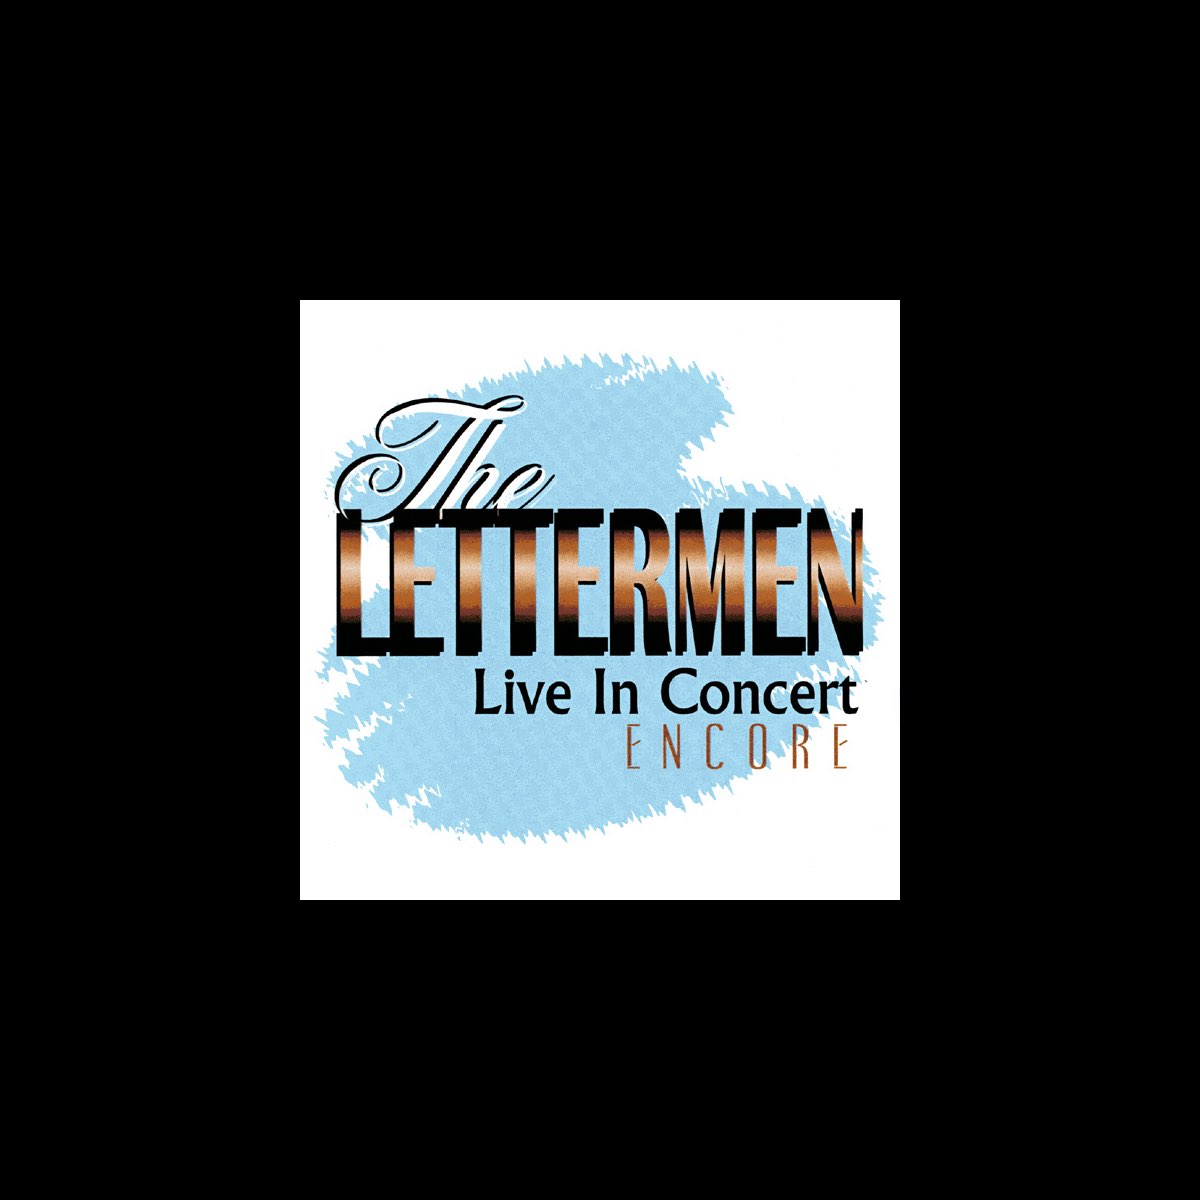 ‎The Lettermen Live In Concert Encore by The Lettermen on Apple Music